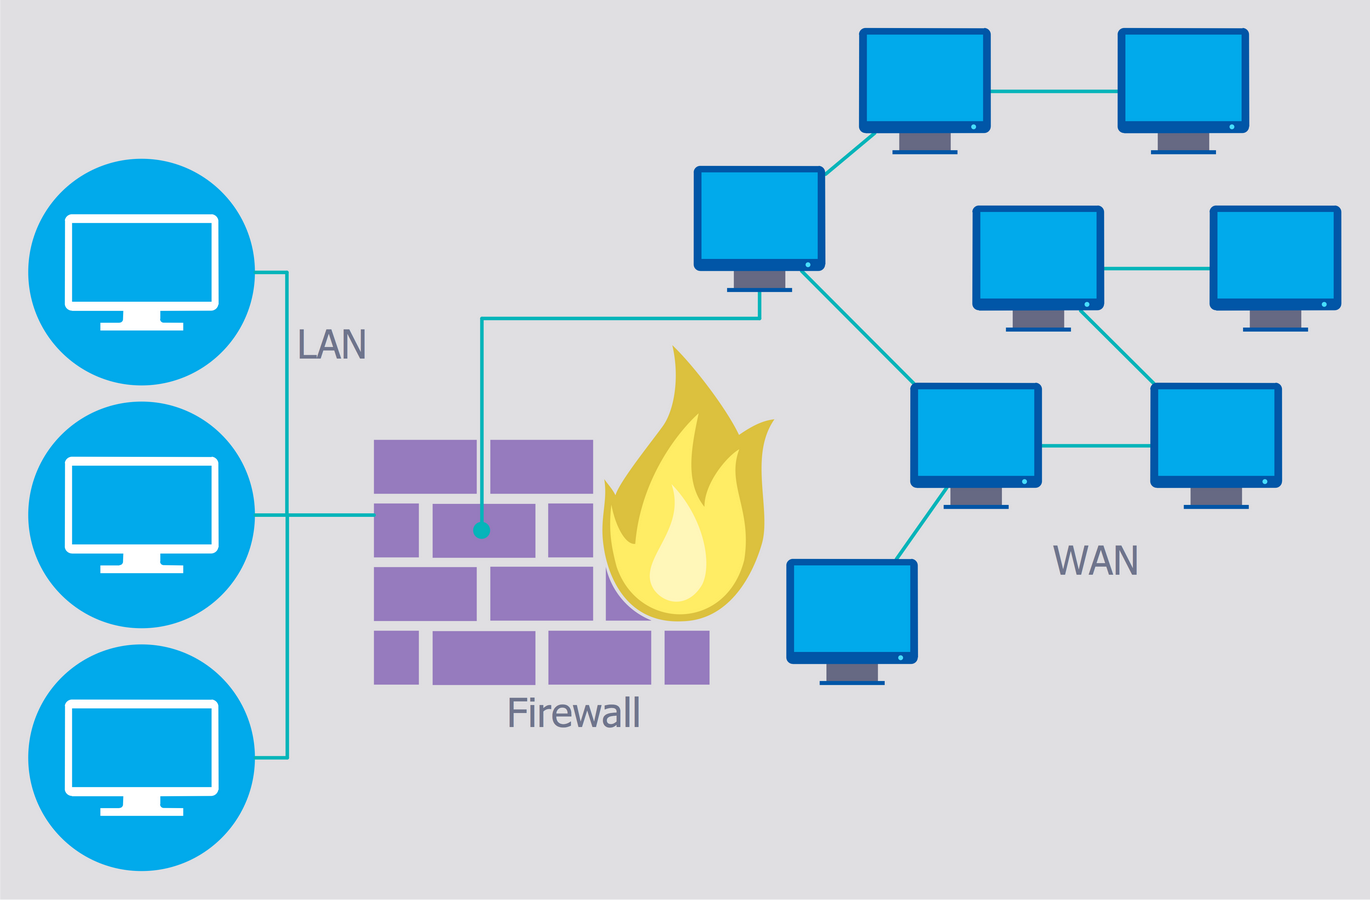 Firewall Between LAN and WAN